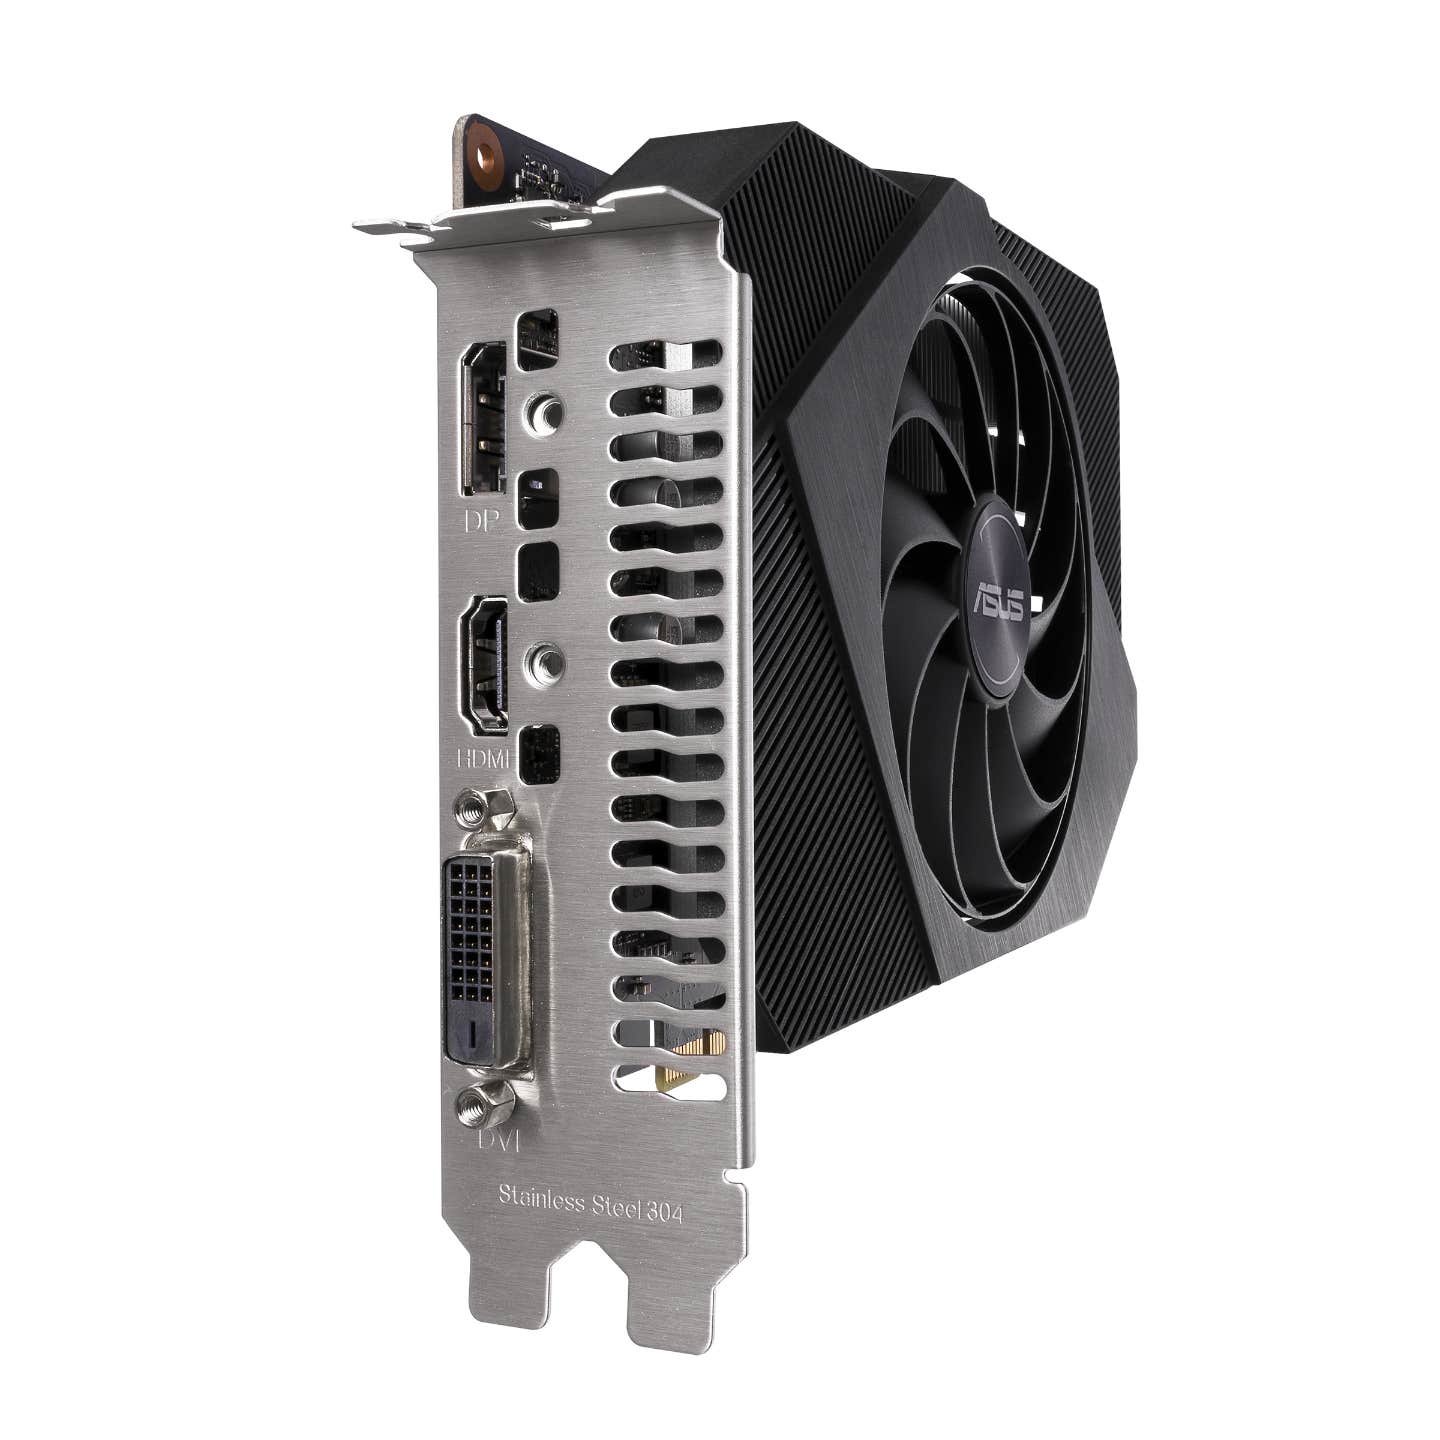 Asus Phoenix Geforce GTX 1650 OC, 4GB DDR6, DVI, HDMI, DP, 1665MHz Clock, Overclocked, Compact Design - WebDuke Computers